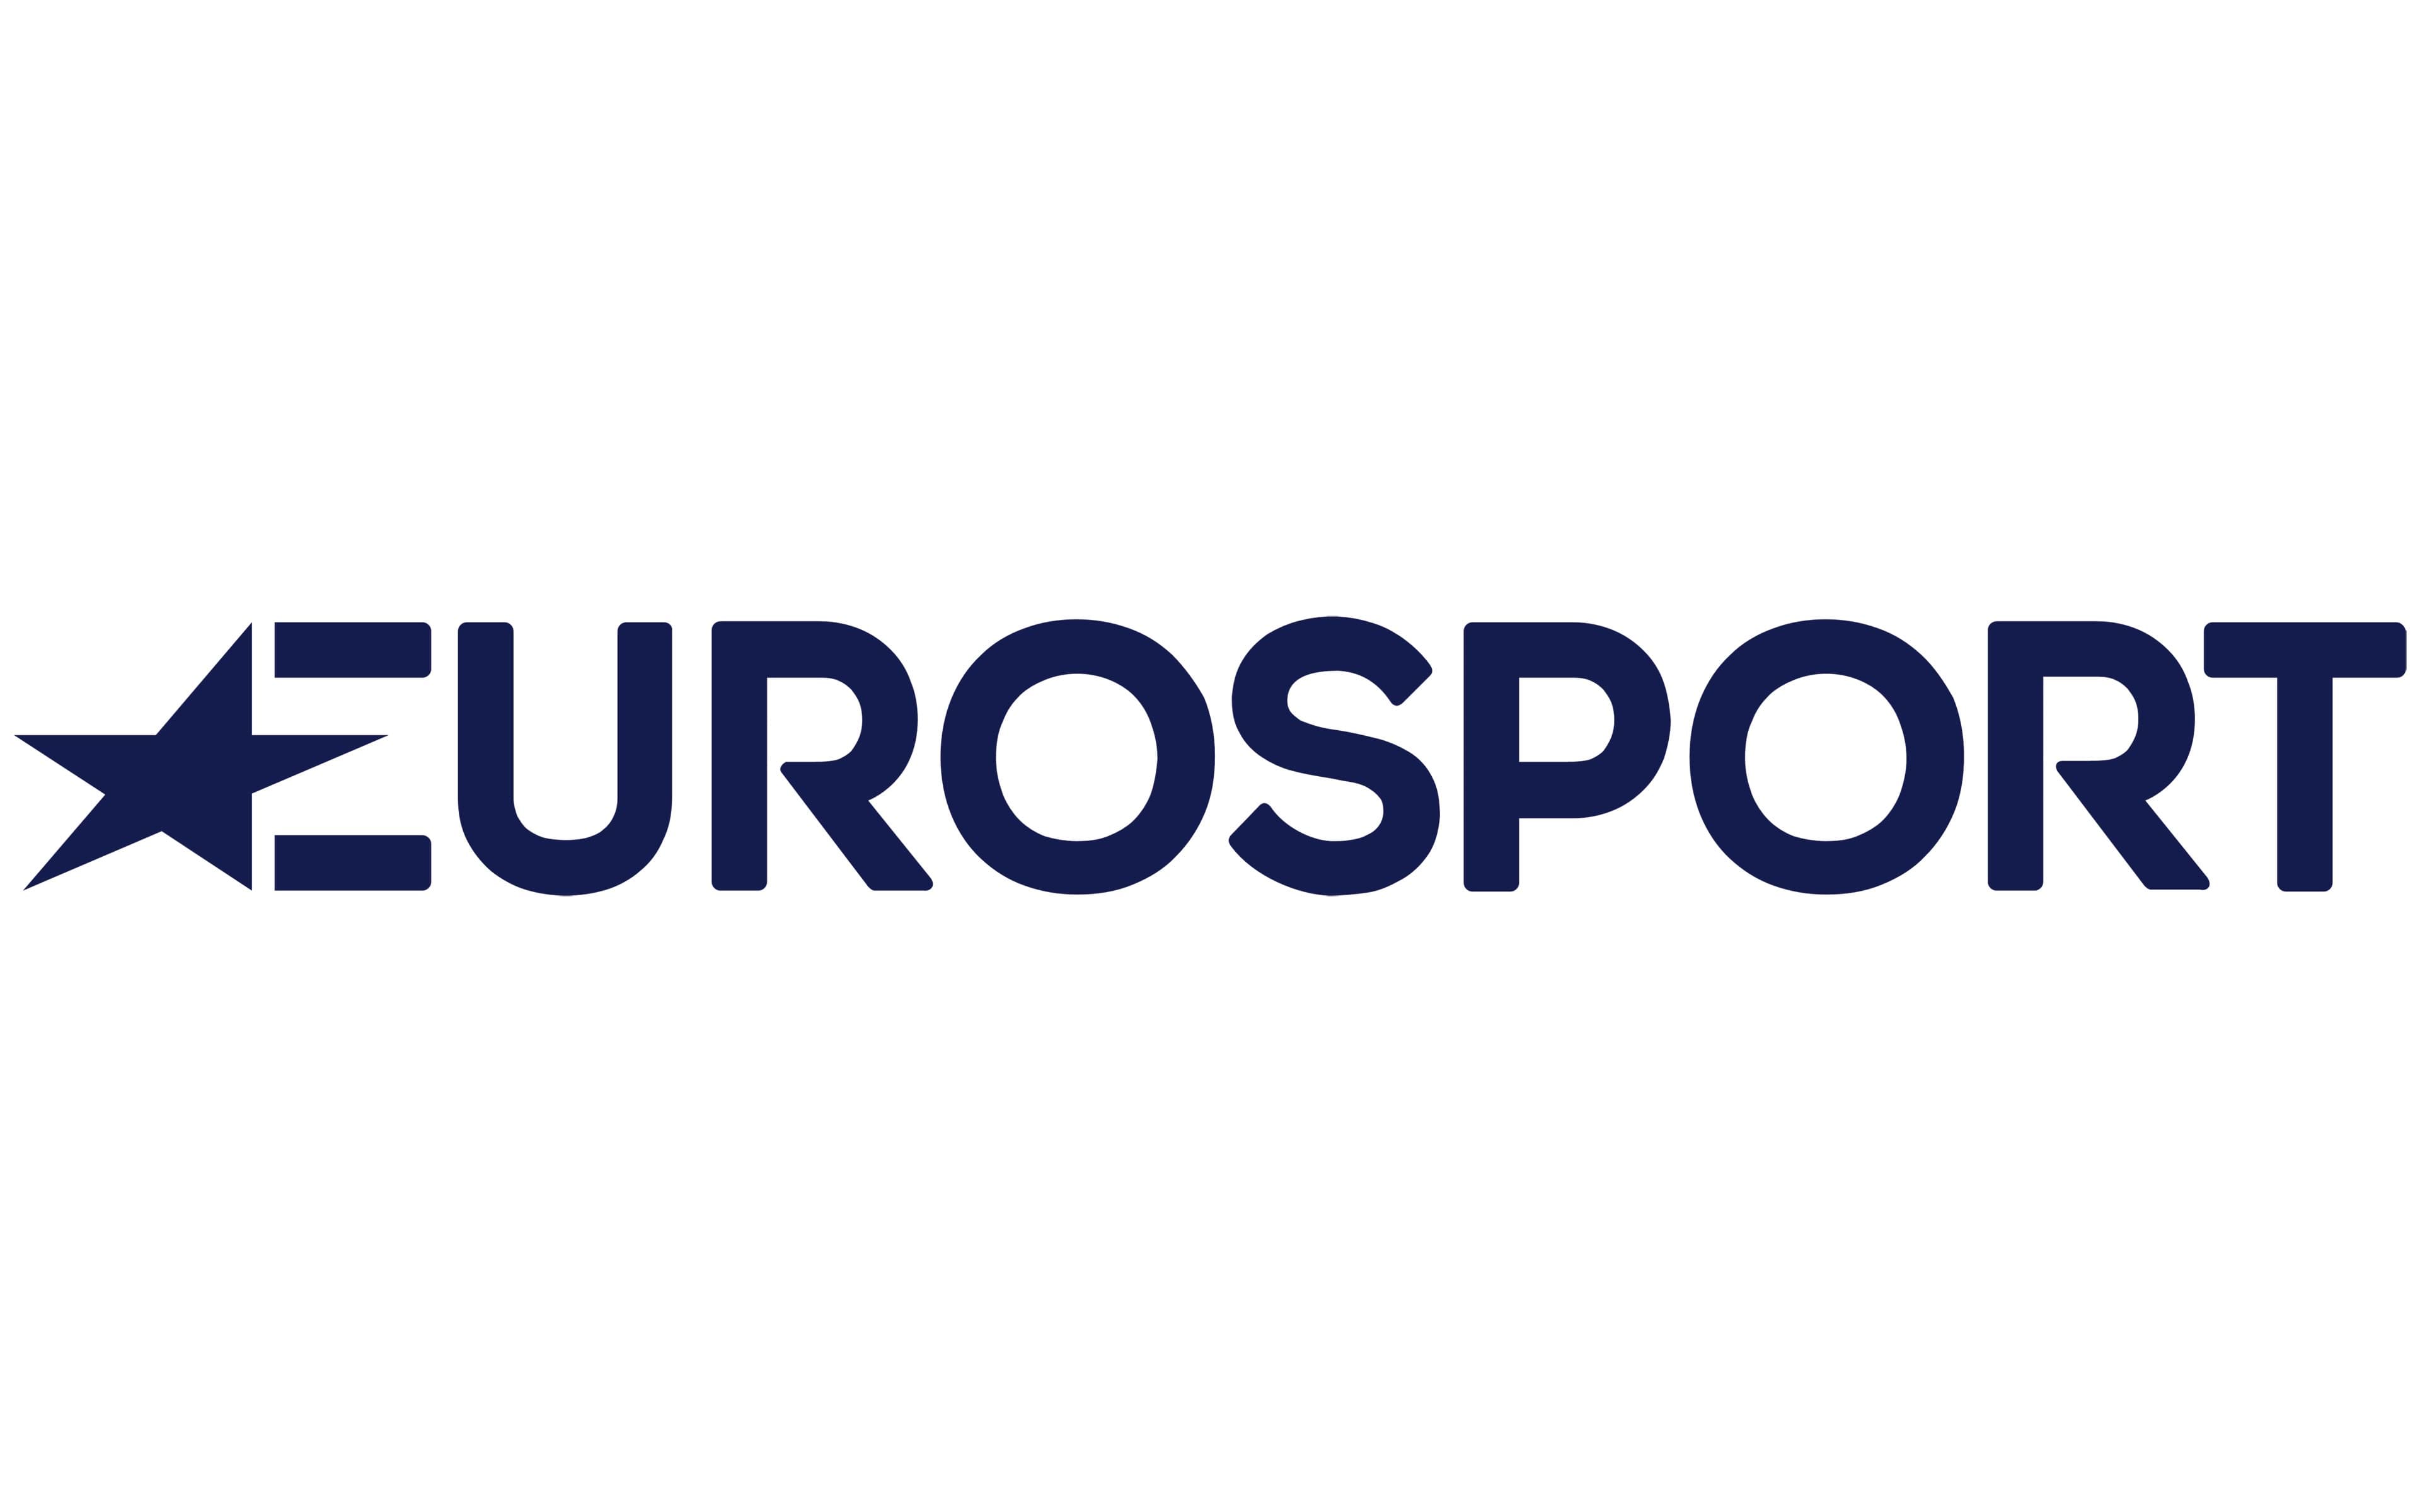 История логотипа канала «Евроспорт»